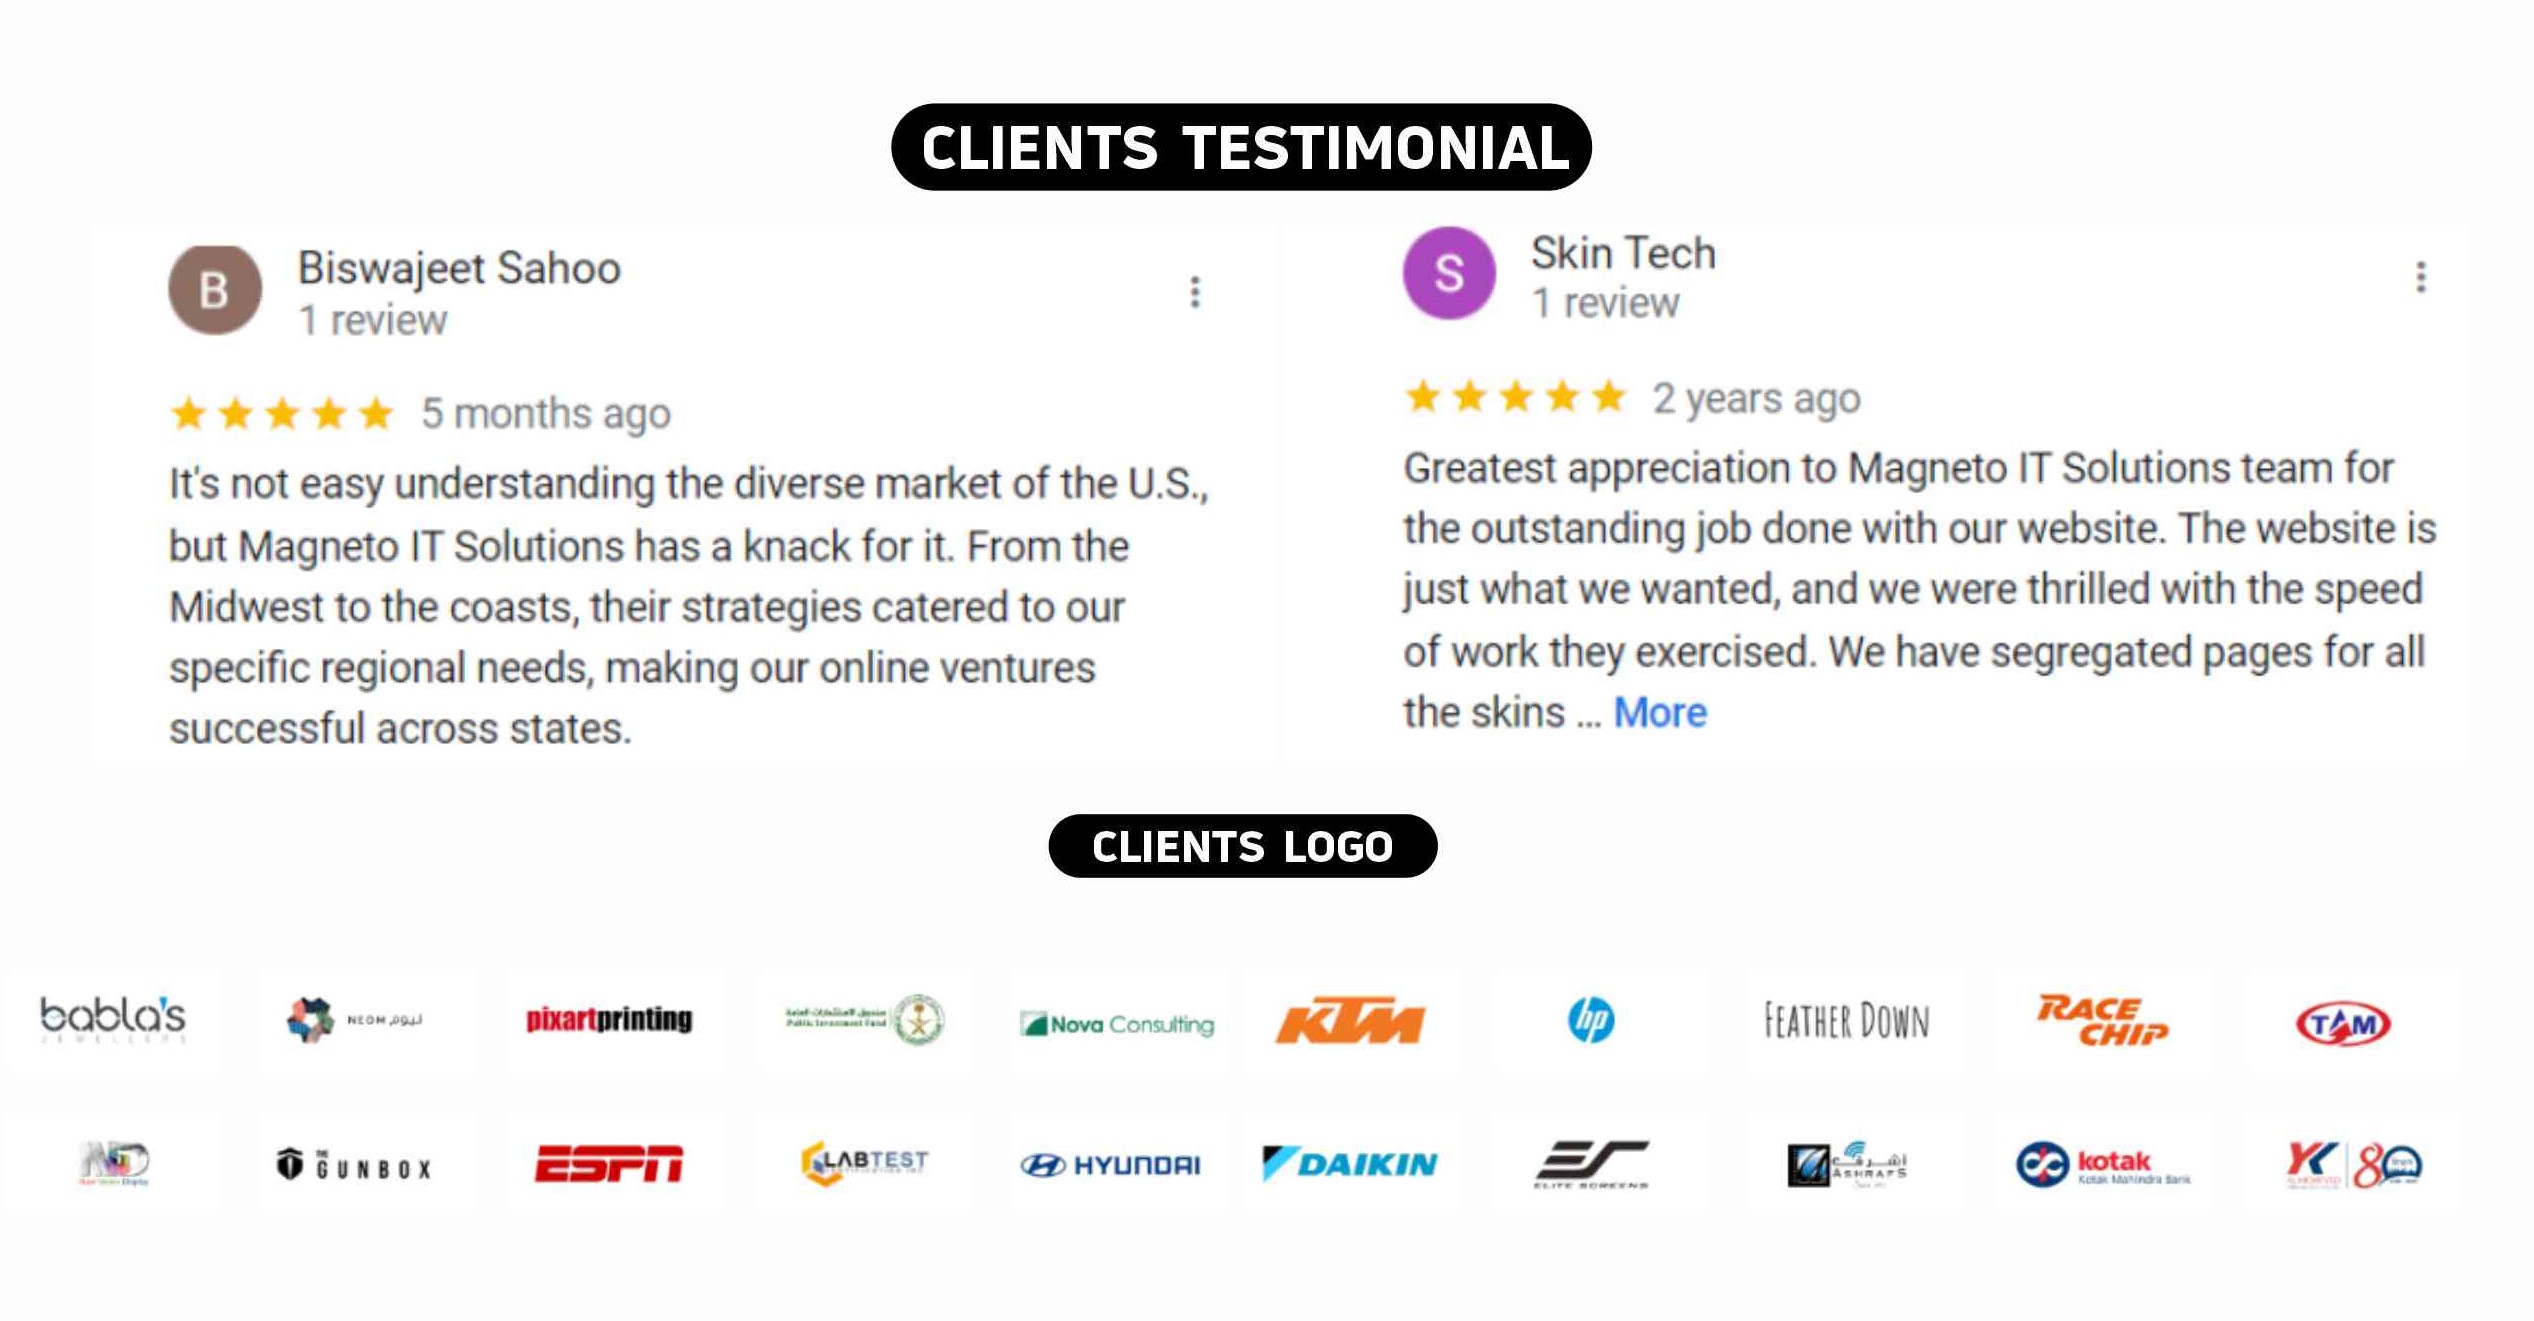 Magneto IT Solutions Client testimonial & Logos 